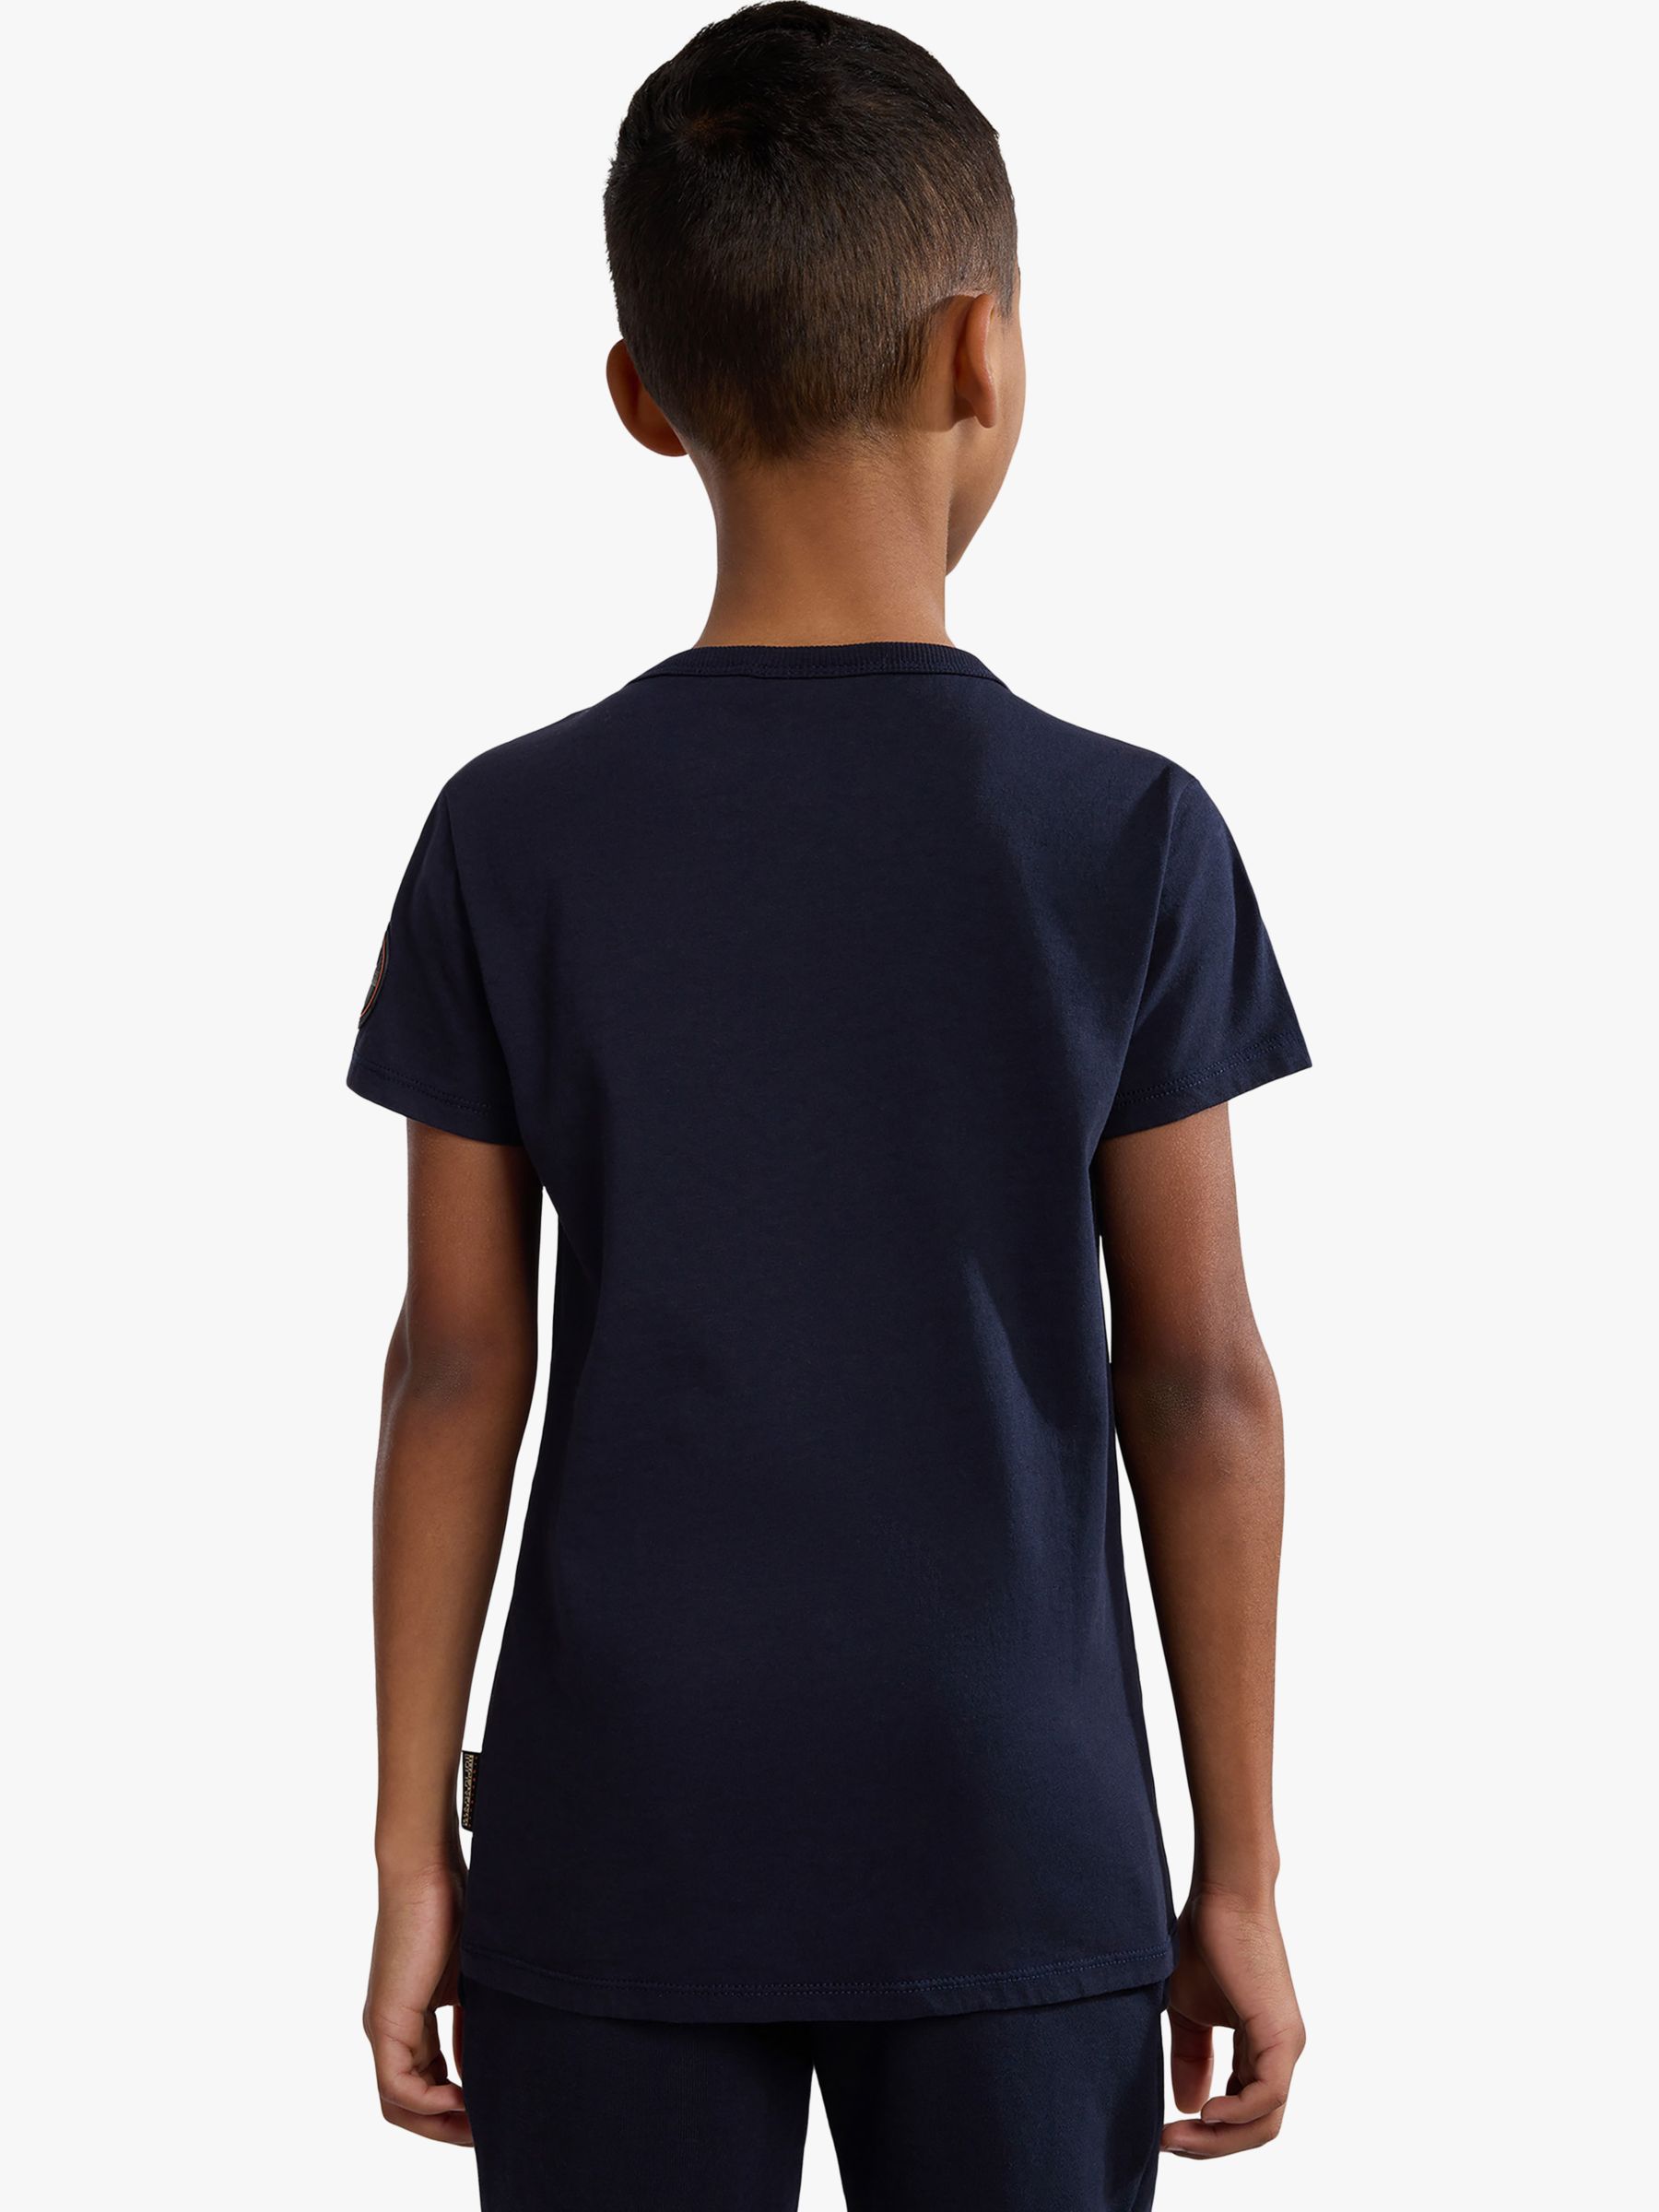 Buy Napapijri Kids' Hudson Graphic Logo Short Sleeve T-Shirt, Navy Online at johnlewis.com